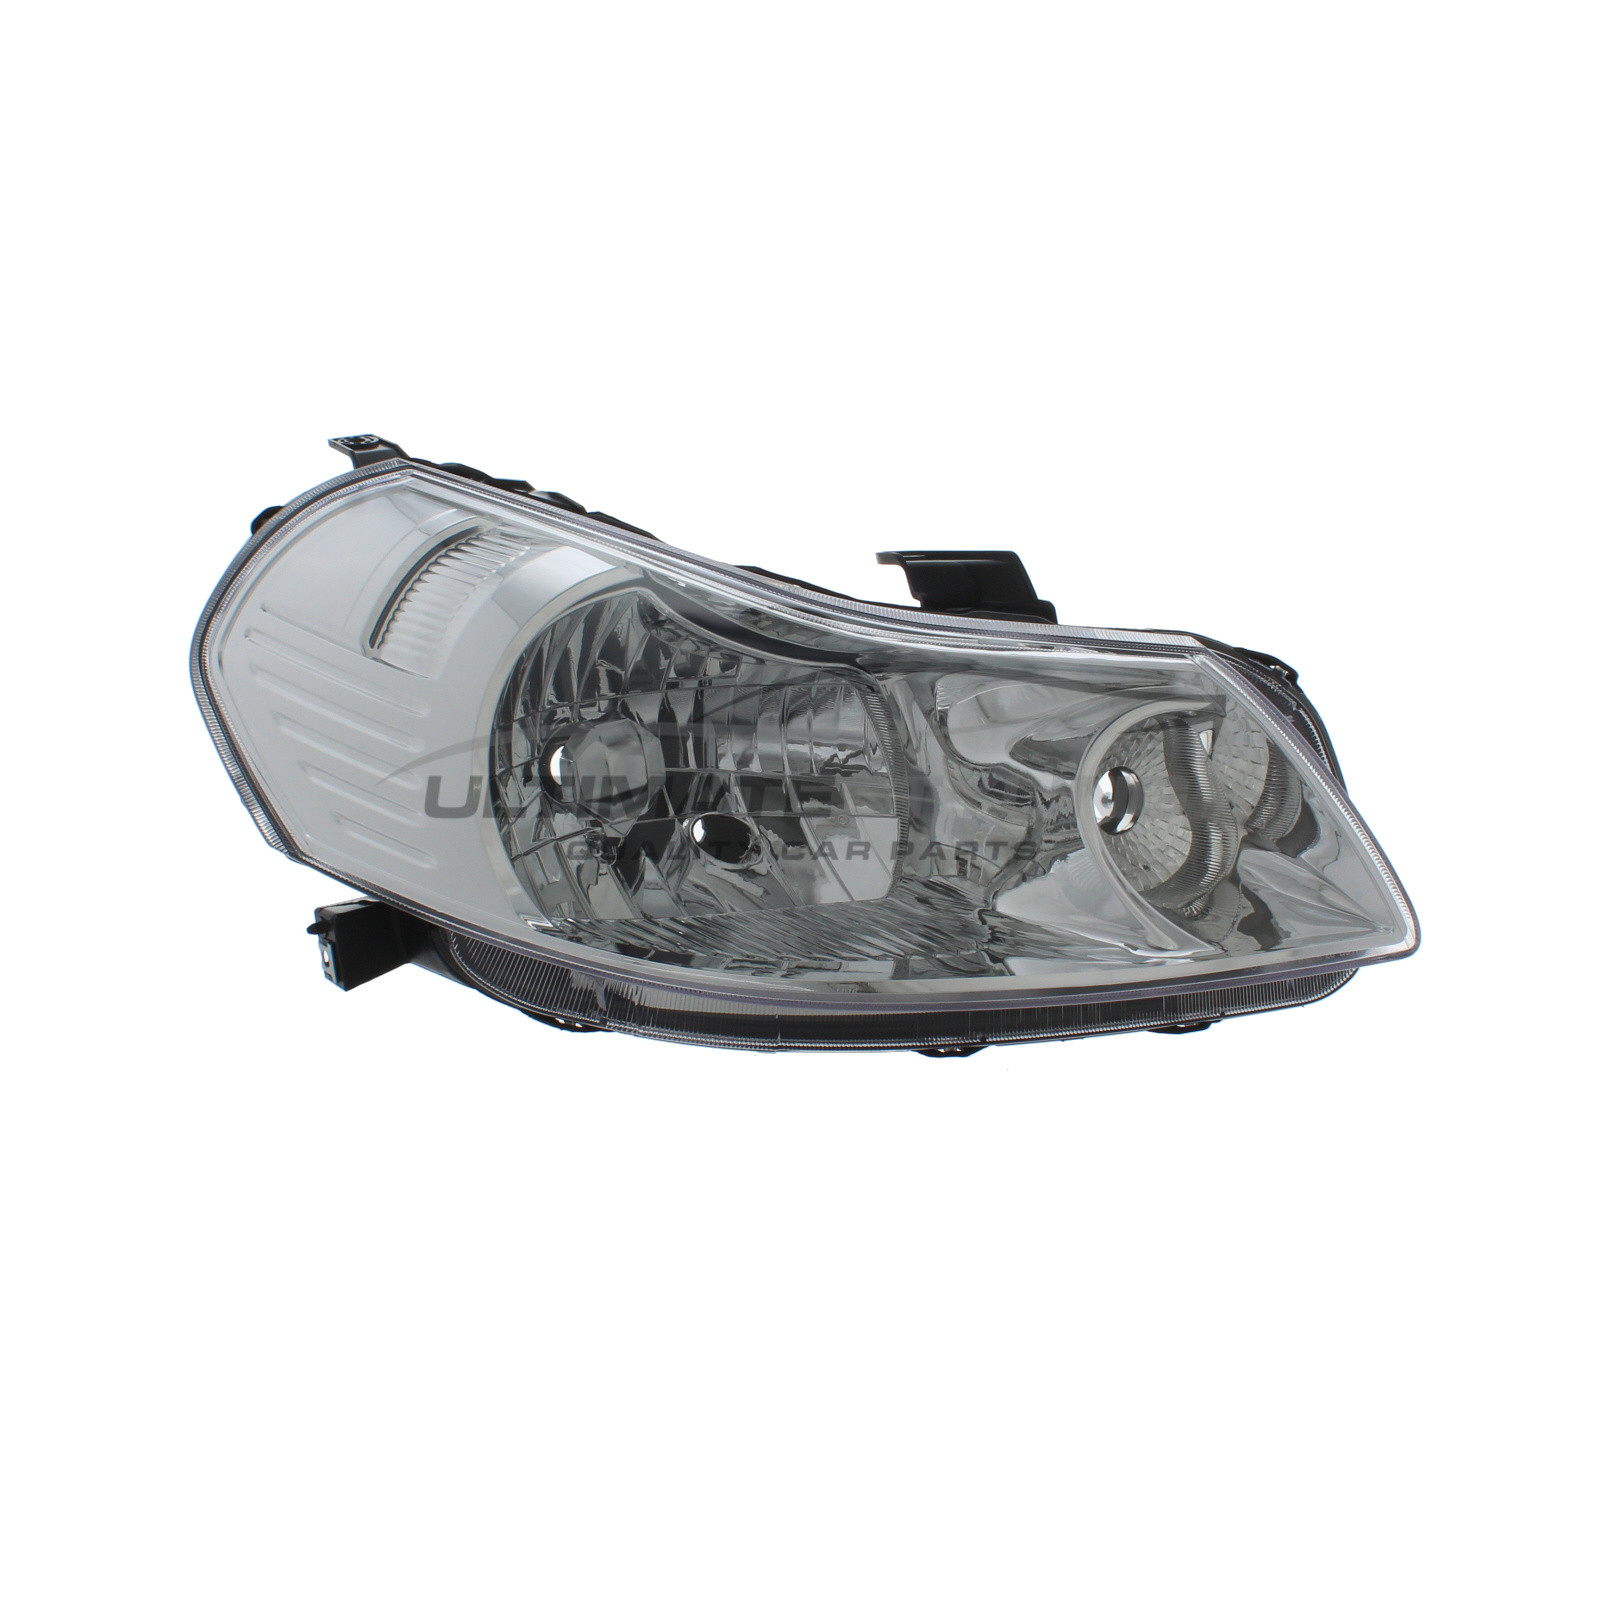 Headlight / Headlamp for Suzuki SX4